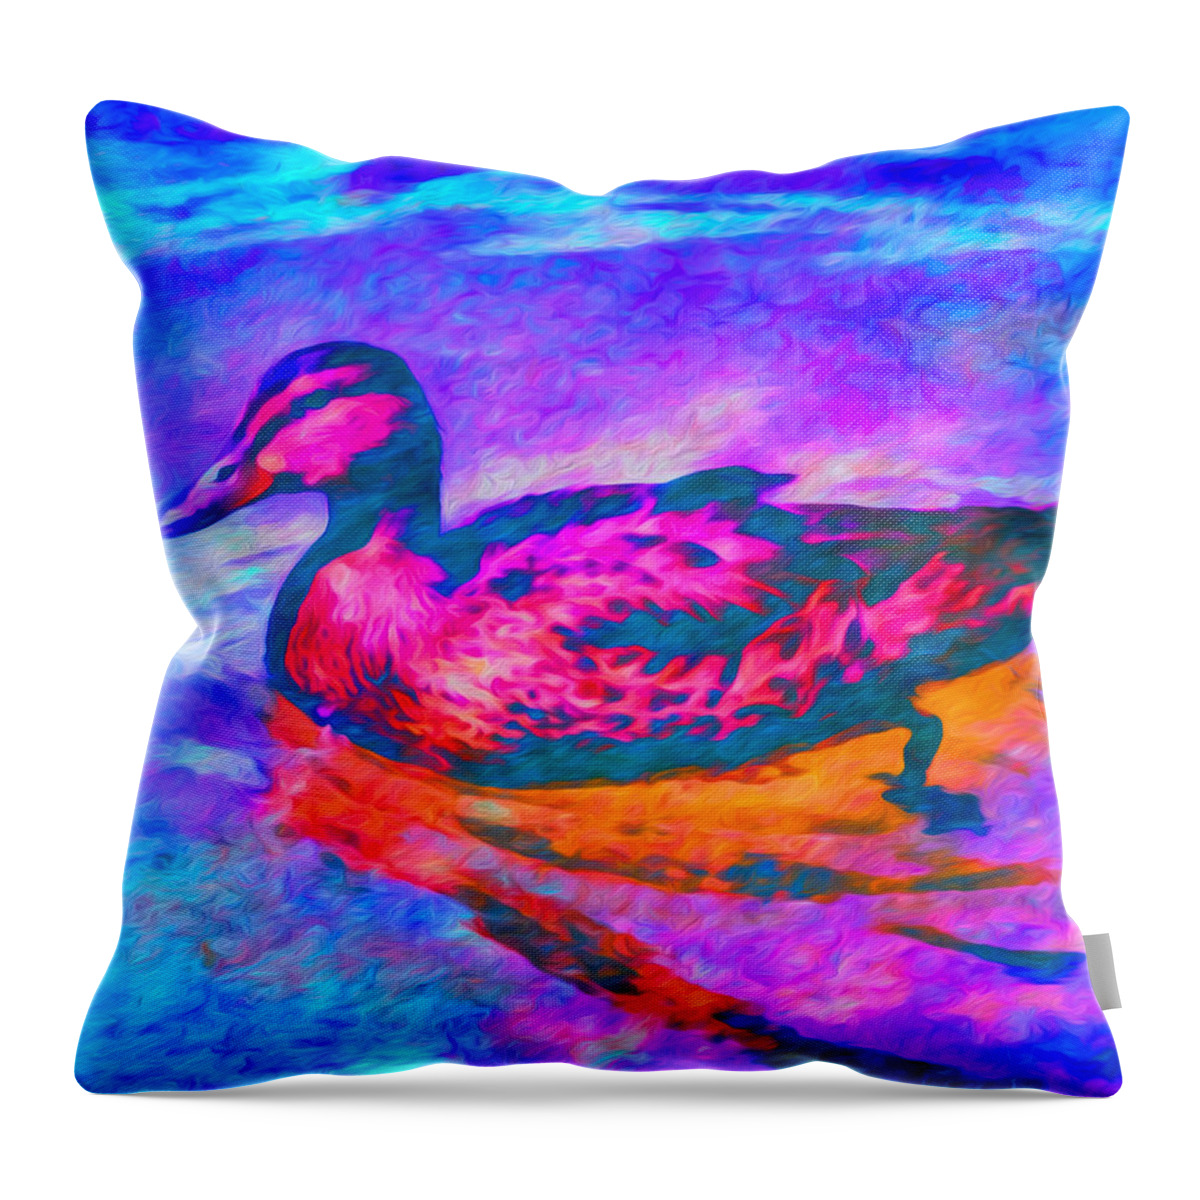 Duck Throw Pillow featuring the digital art Colorful Duck Art by Priya Ghose by Priya Ghose